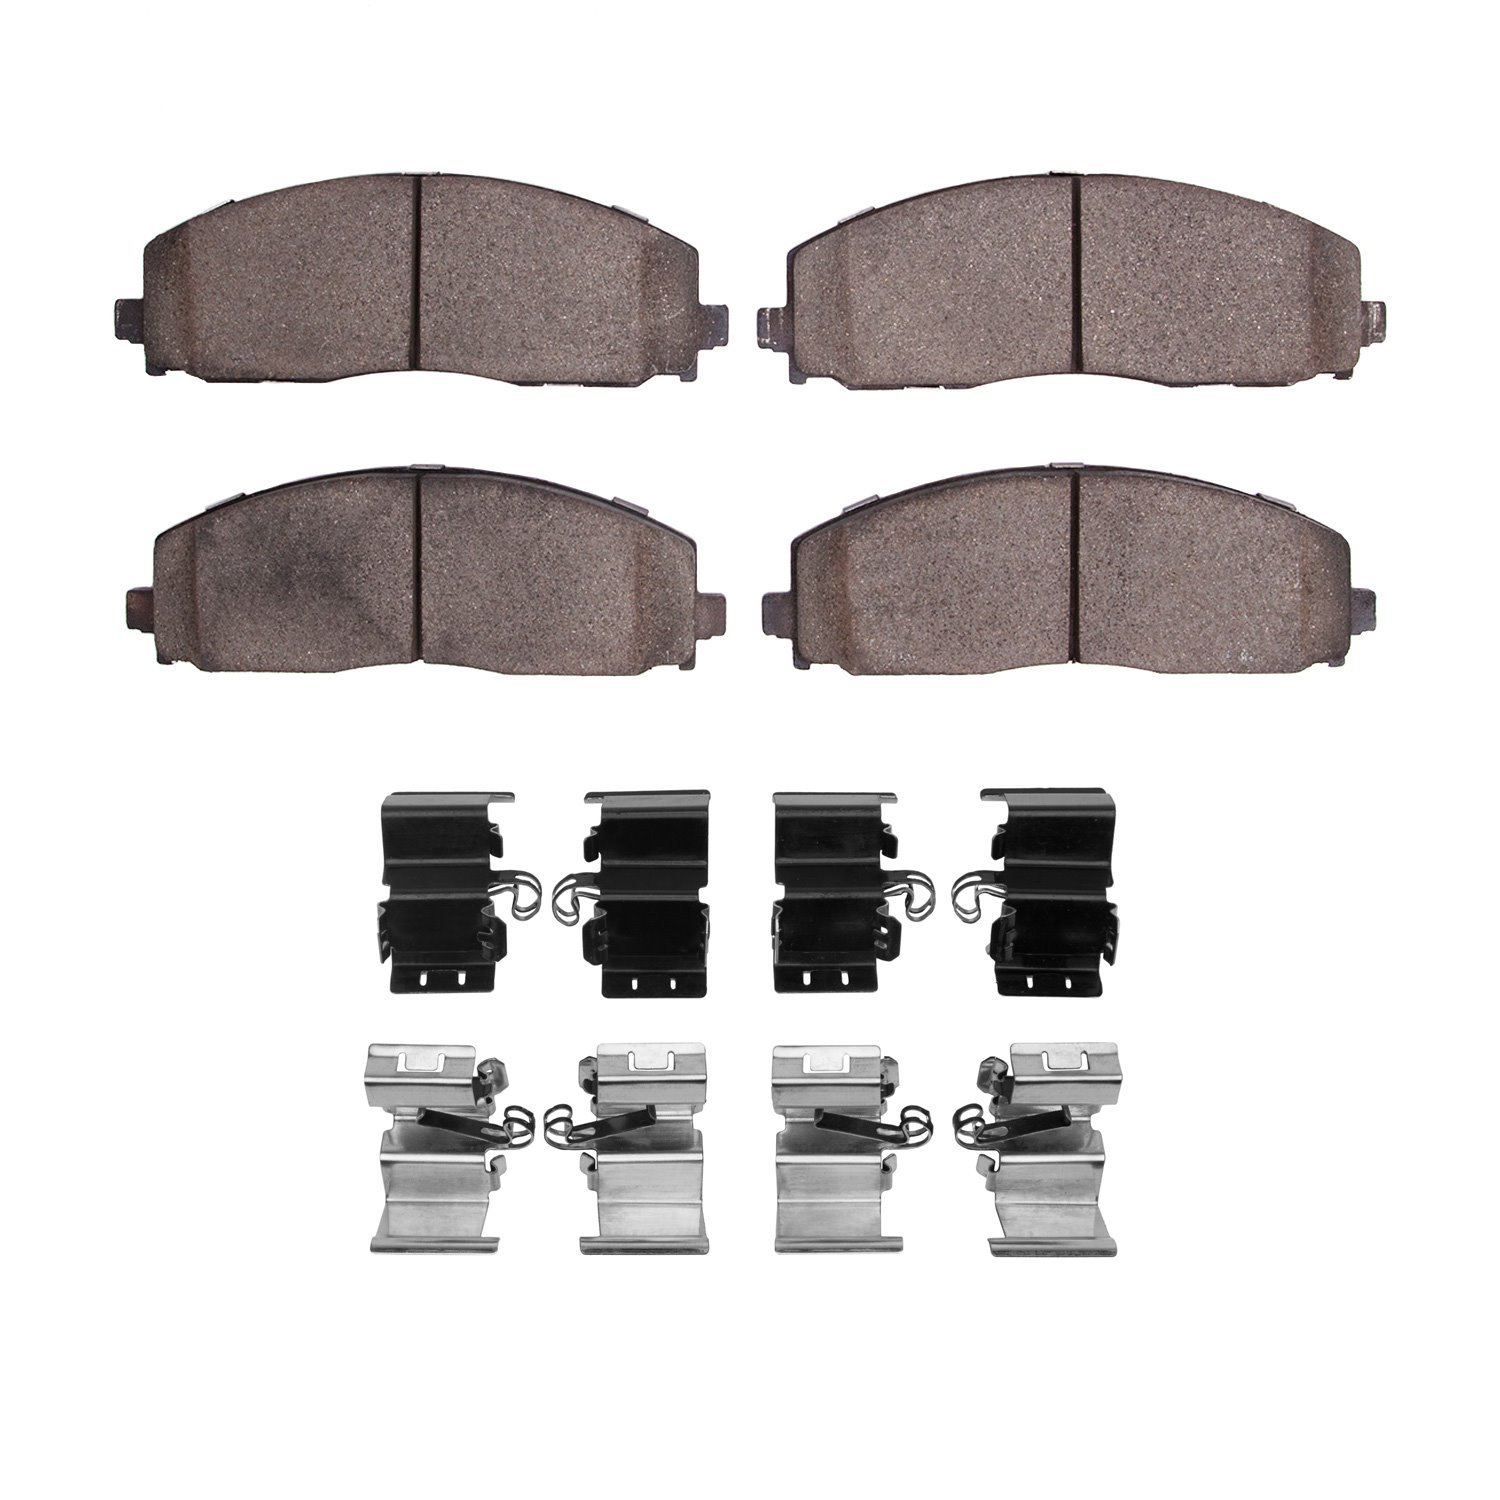 1551-1589-01 5000 Advanced Ceramic Brake Pads & Hardware Kit, Fits Select Multiple Makes/Models, Position: Front